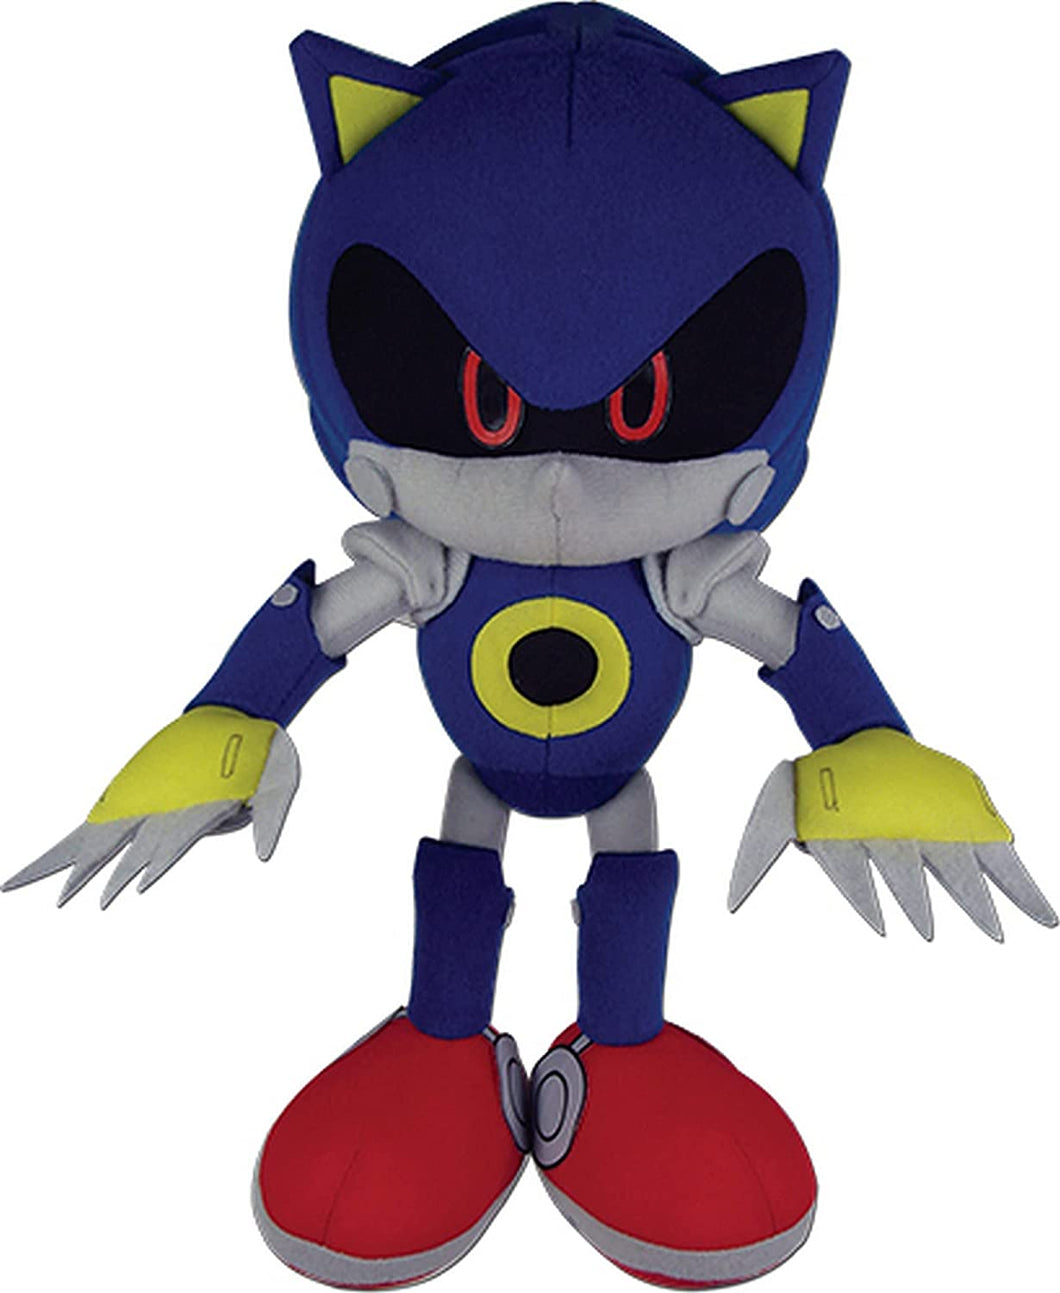 The Metal Sonic - Metal Sonic The Robotic Hedgehog - Free